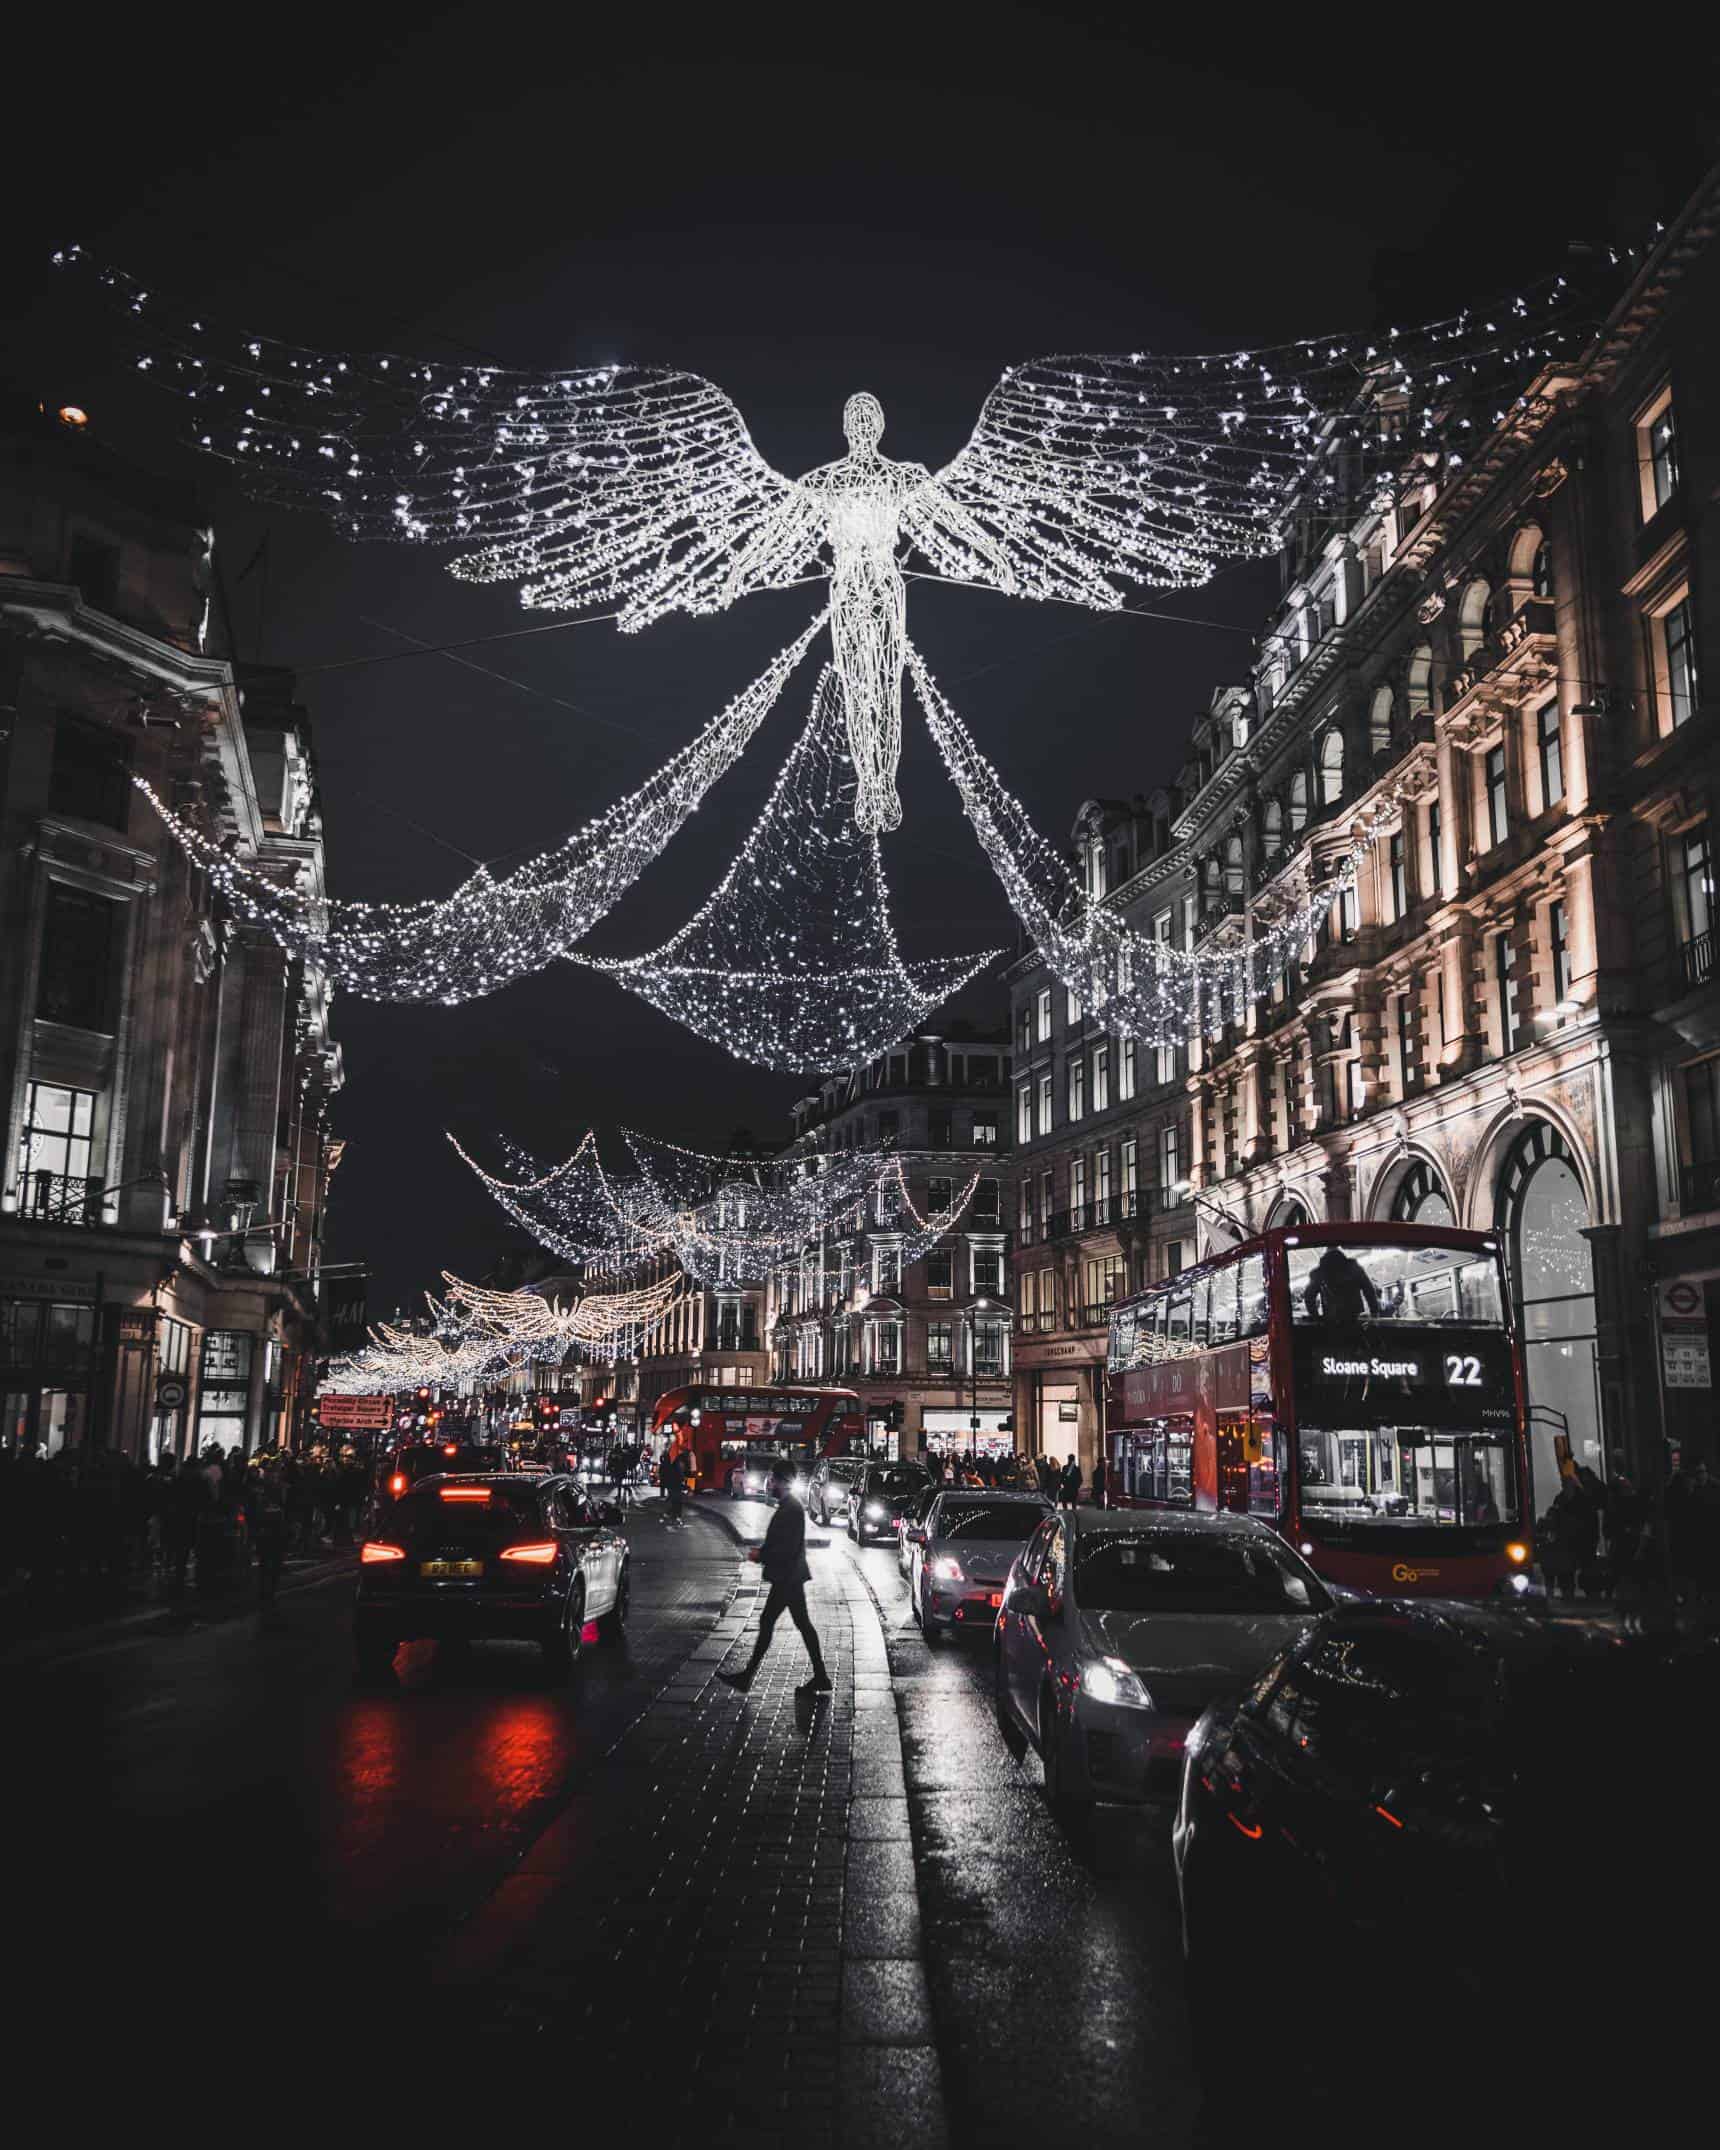 London at Christmas, My favourite winter memories